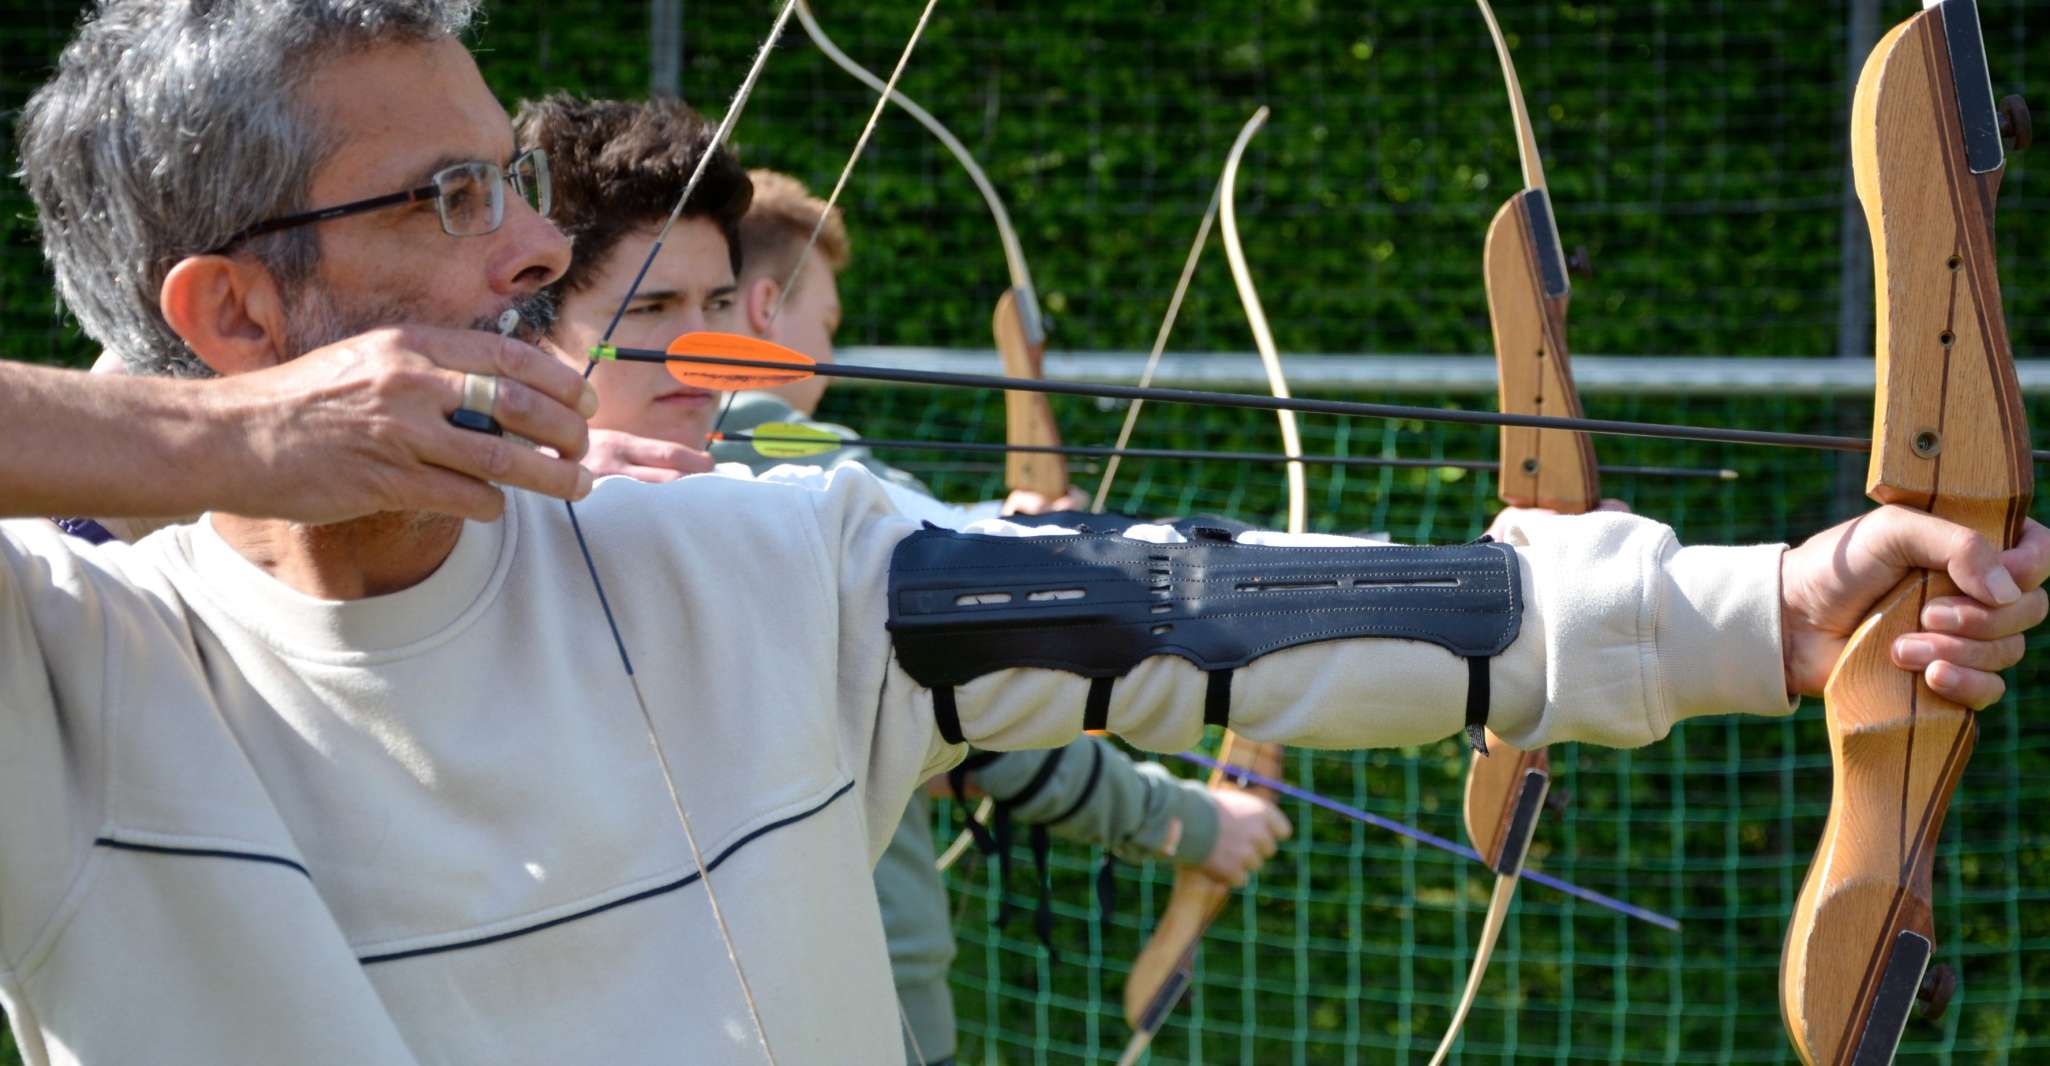 Bad Bellingen, Beginner's Archery Course in the Park - Housity